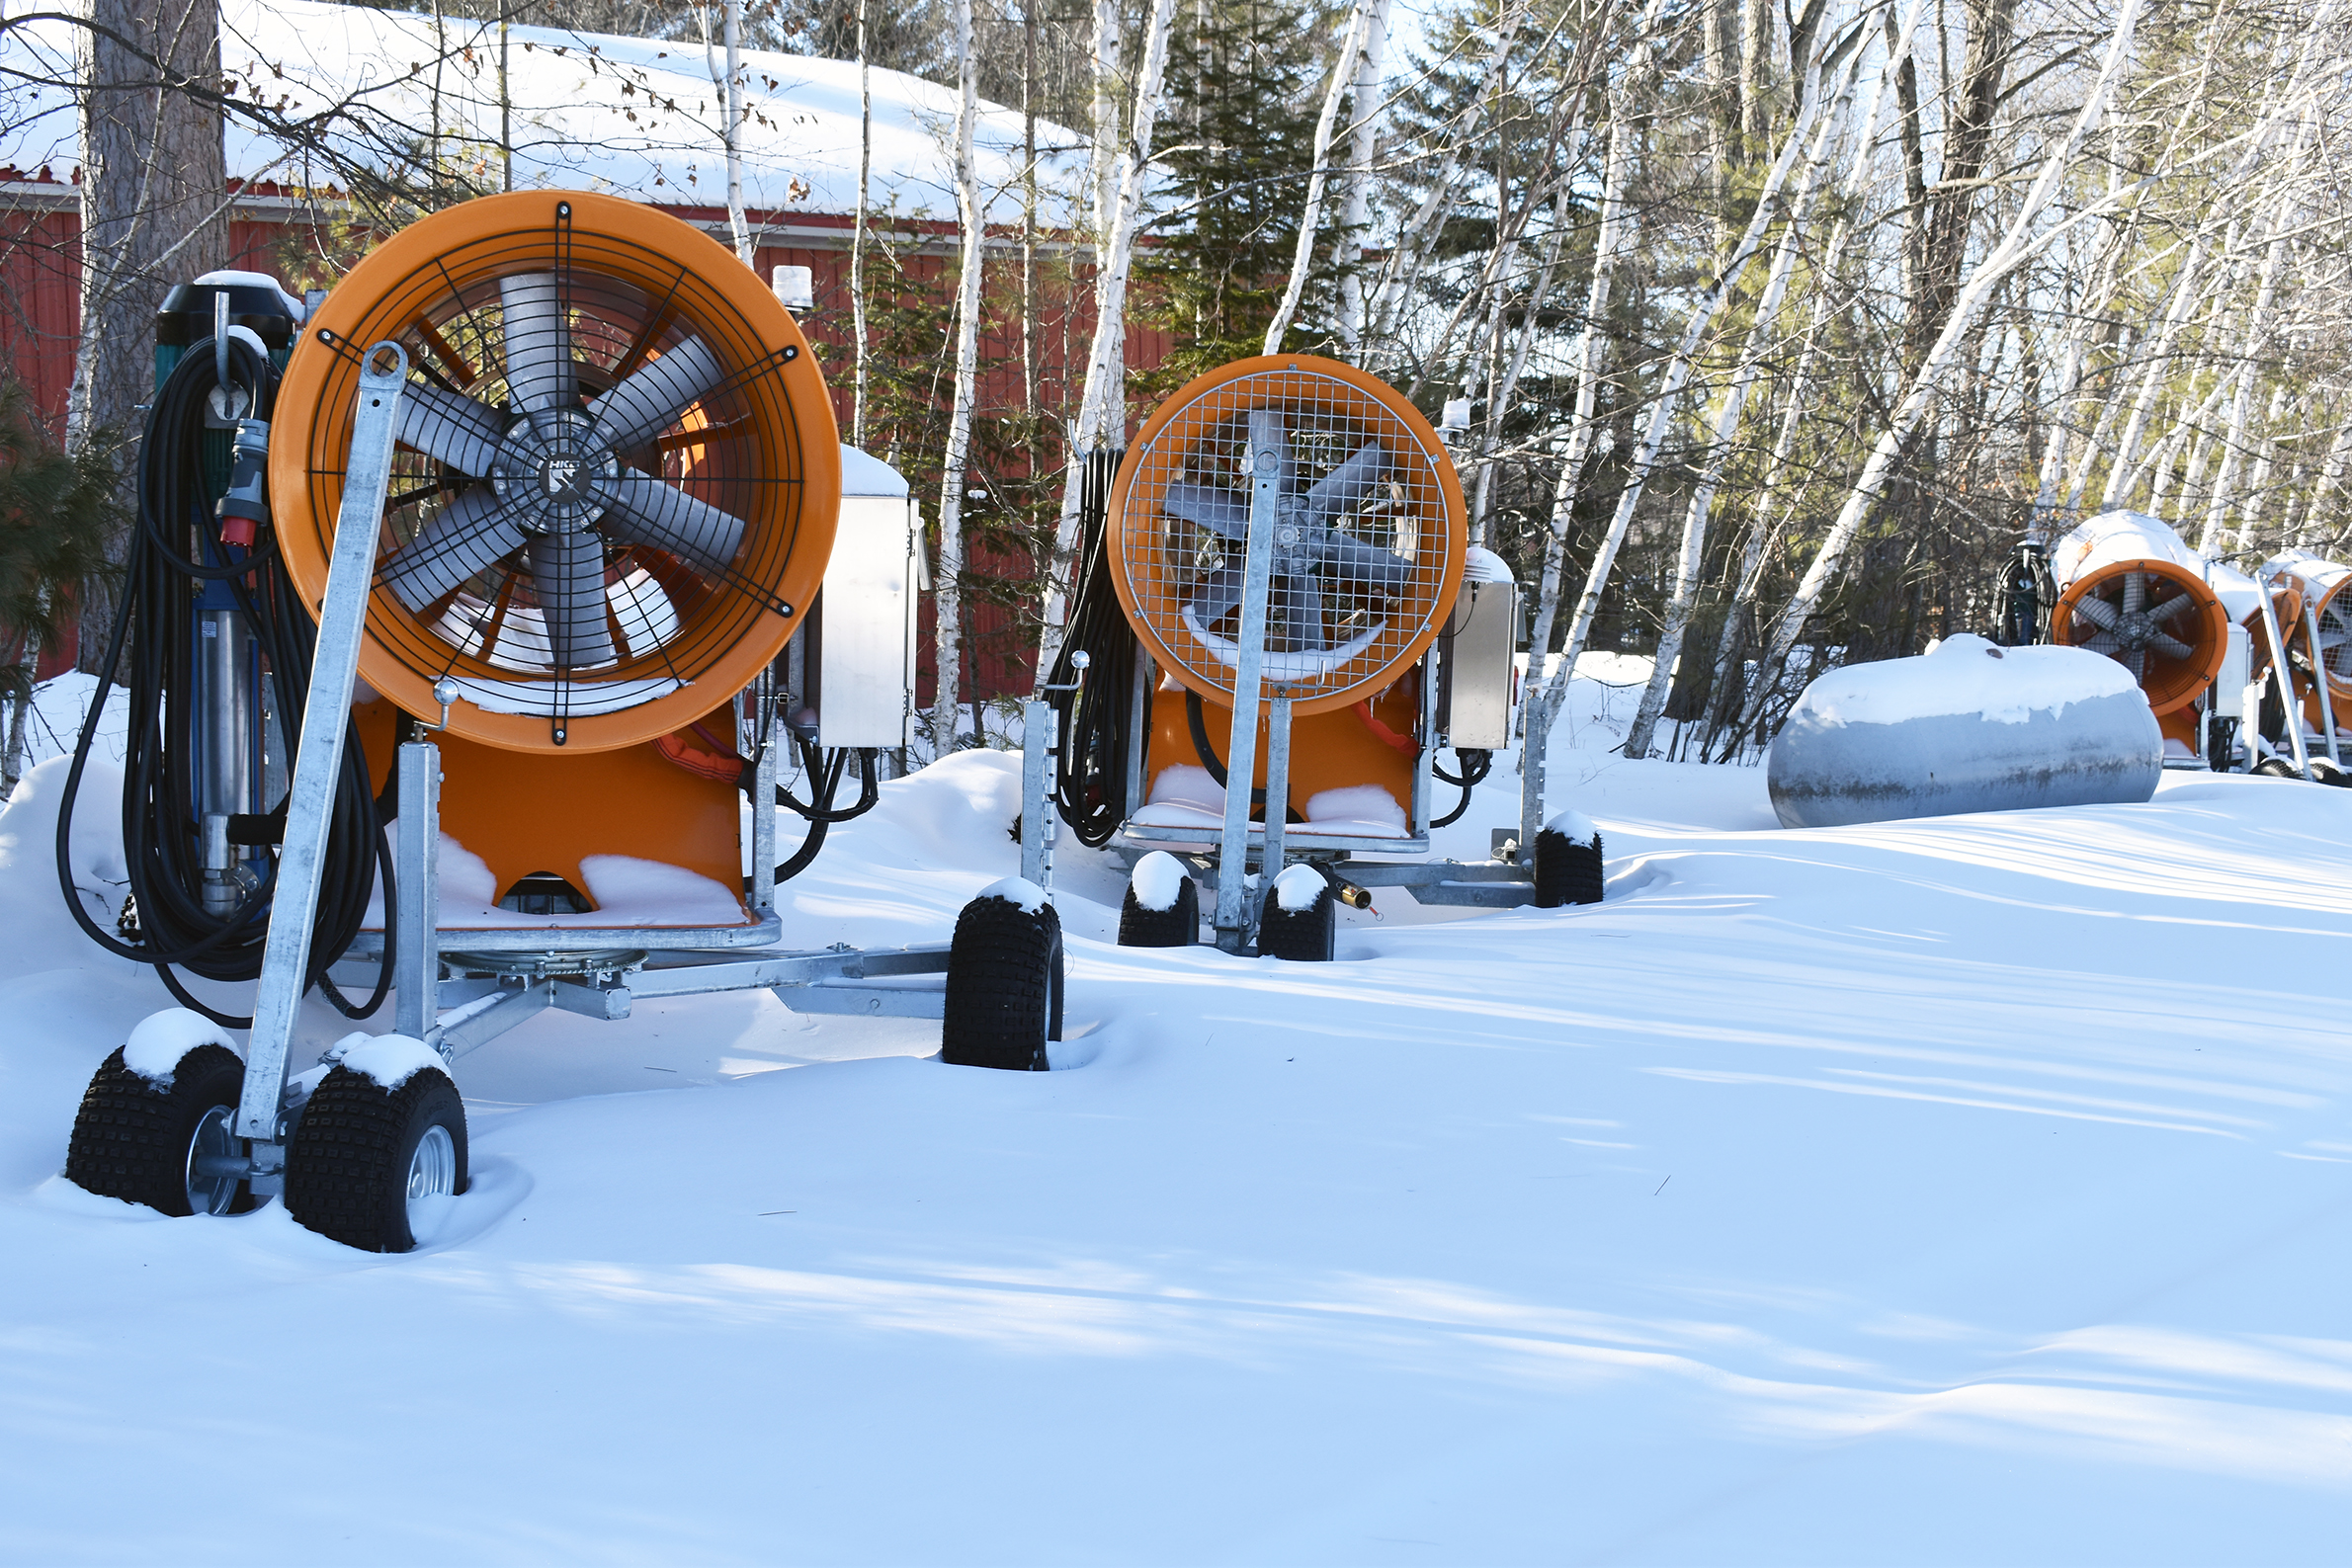 Snow machines used to make snow on Birkie loops